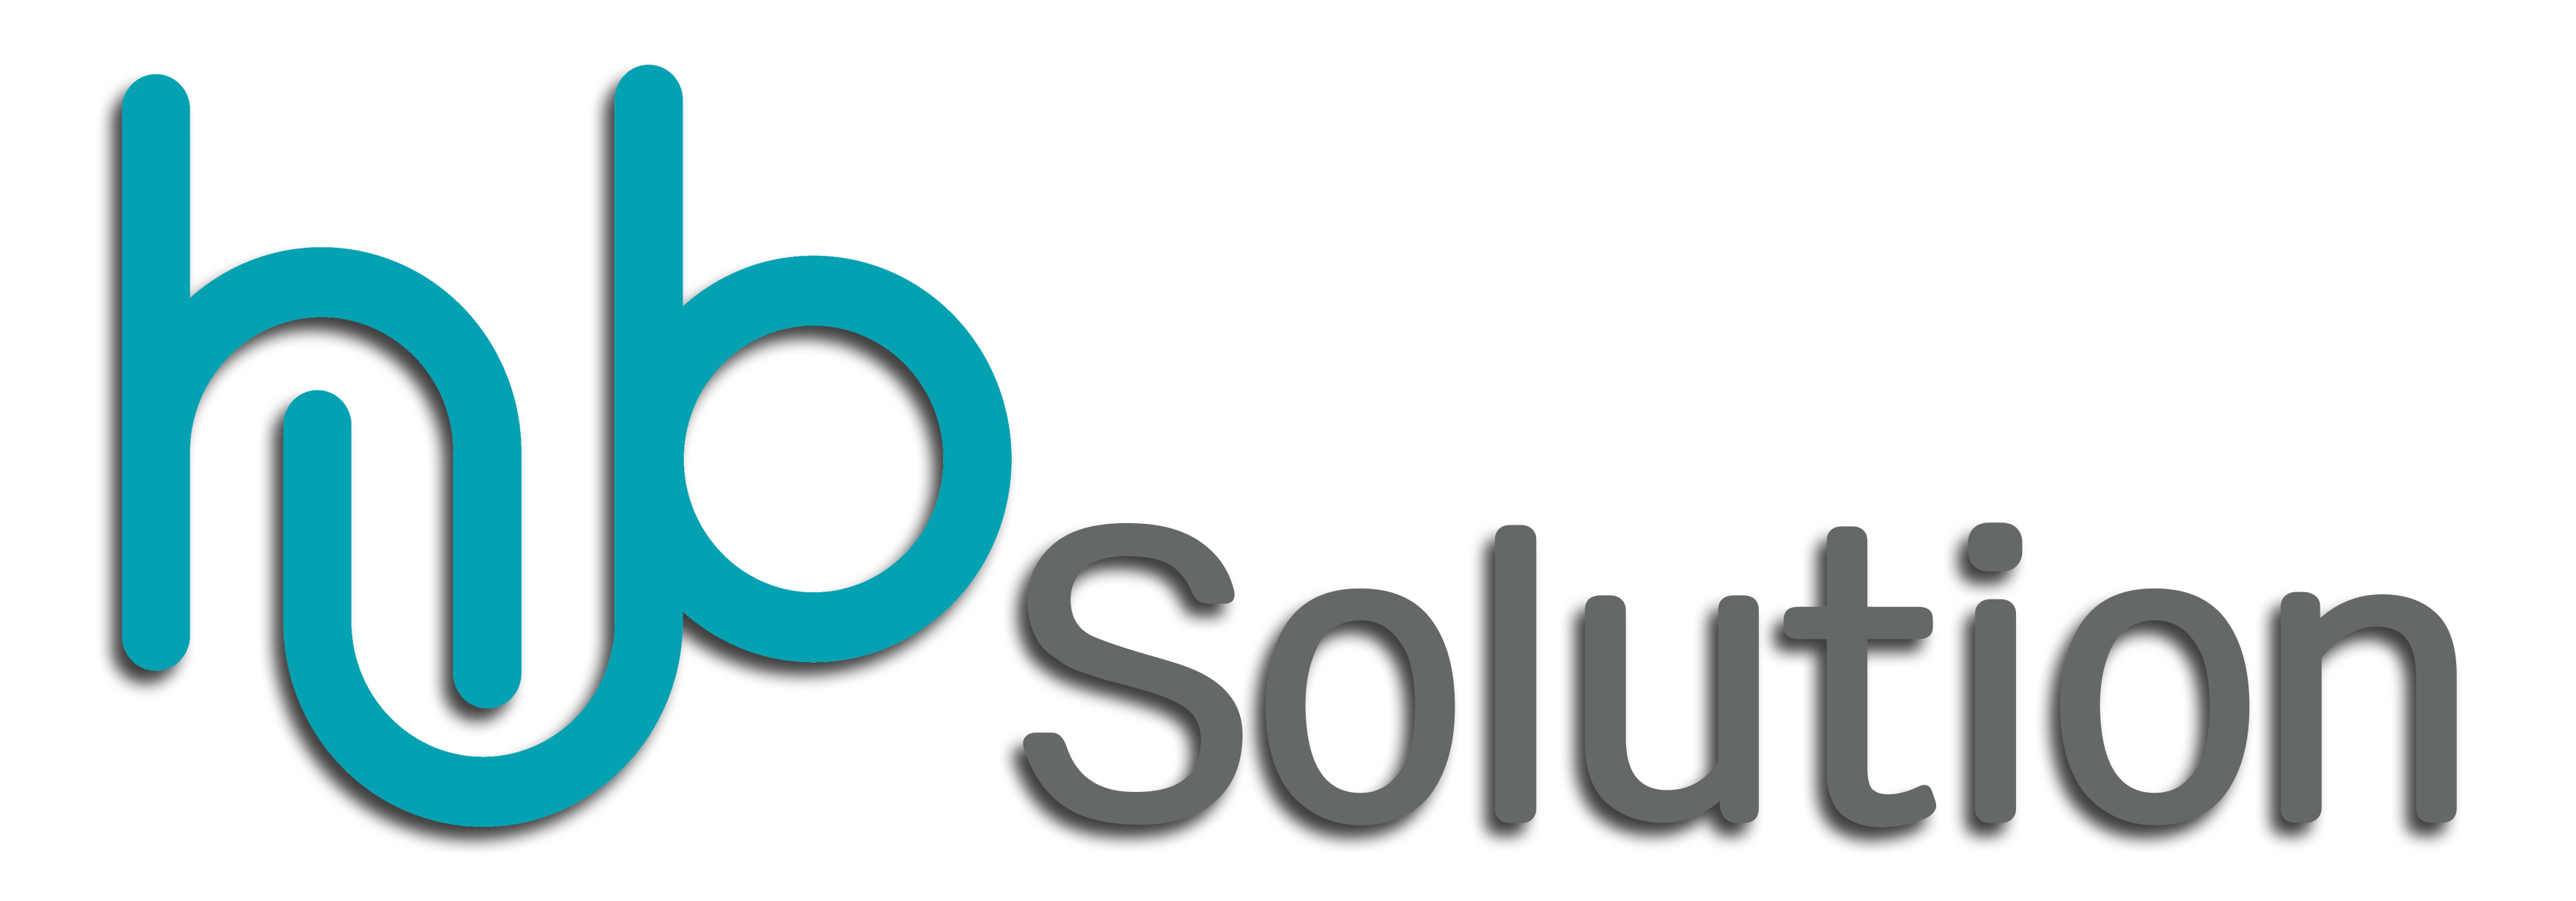 hubsolution logo